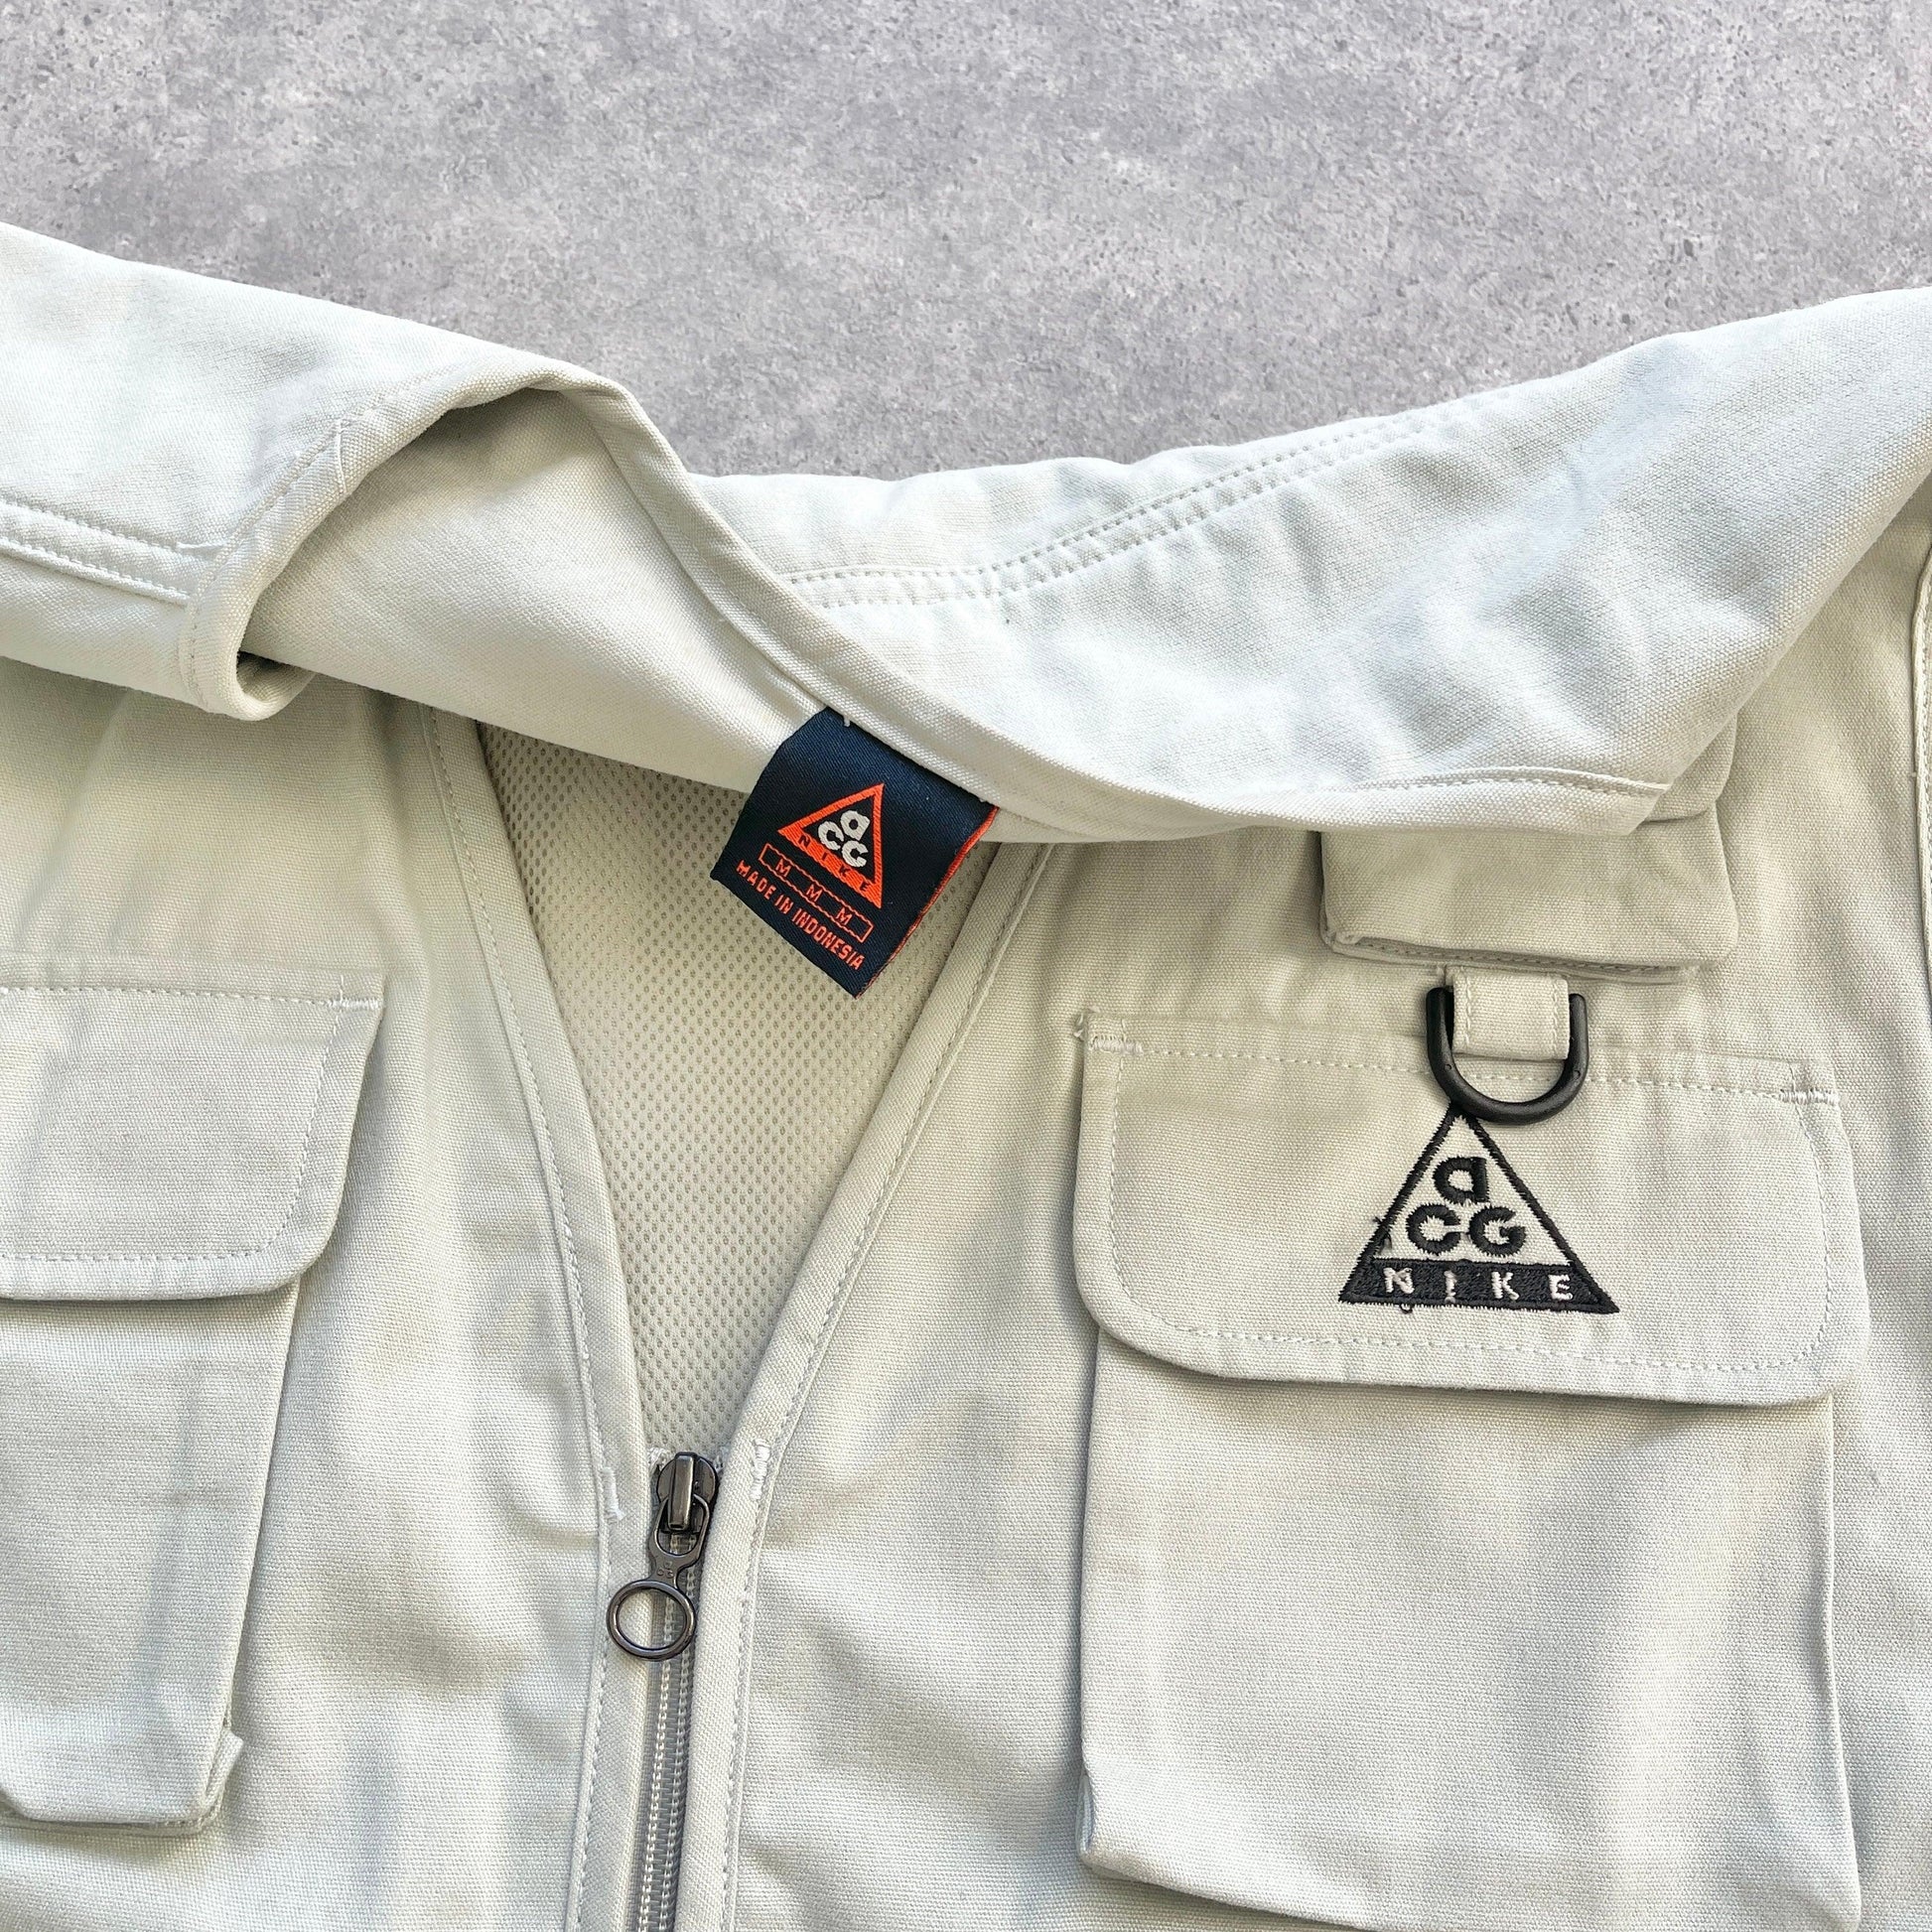 Nike ACG RARE 1990s cargo vest jacket (M) - Known Source